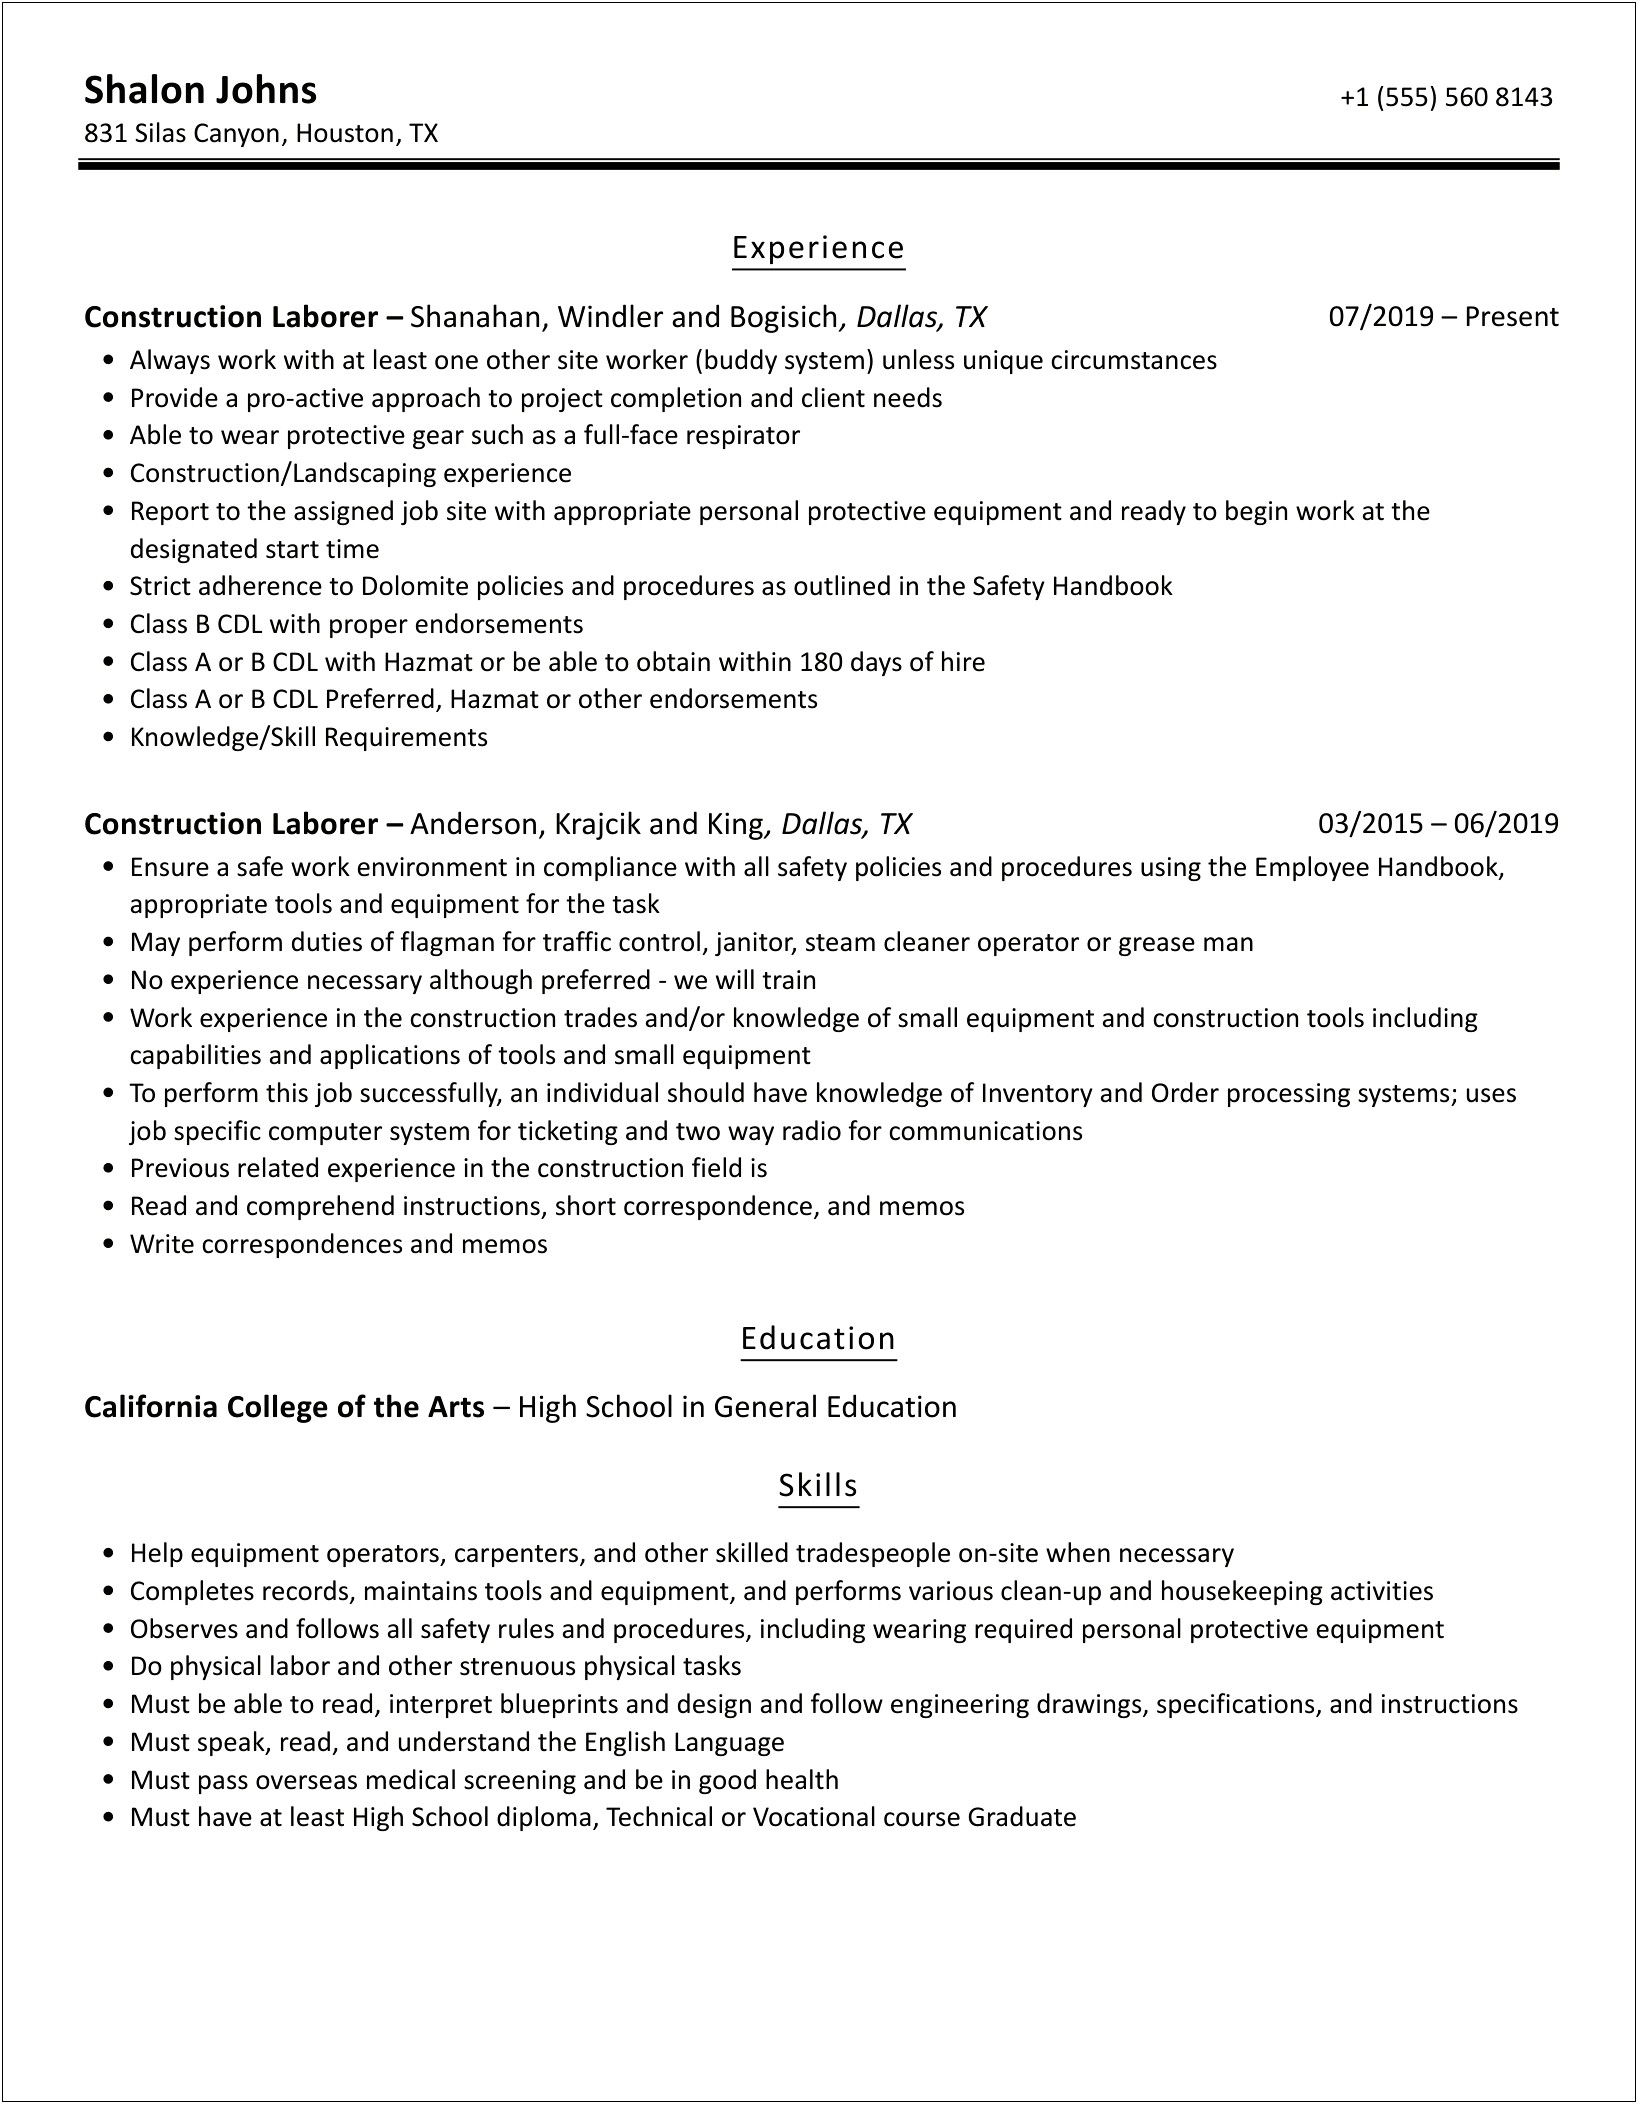 Resume Objective Sample For Construction Laborer